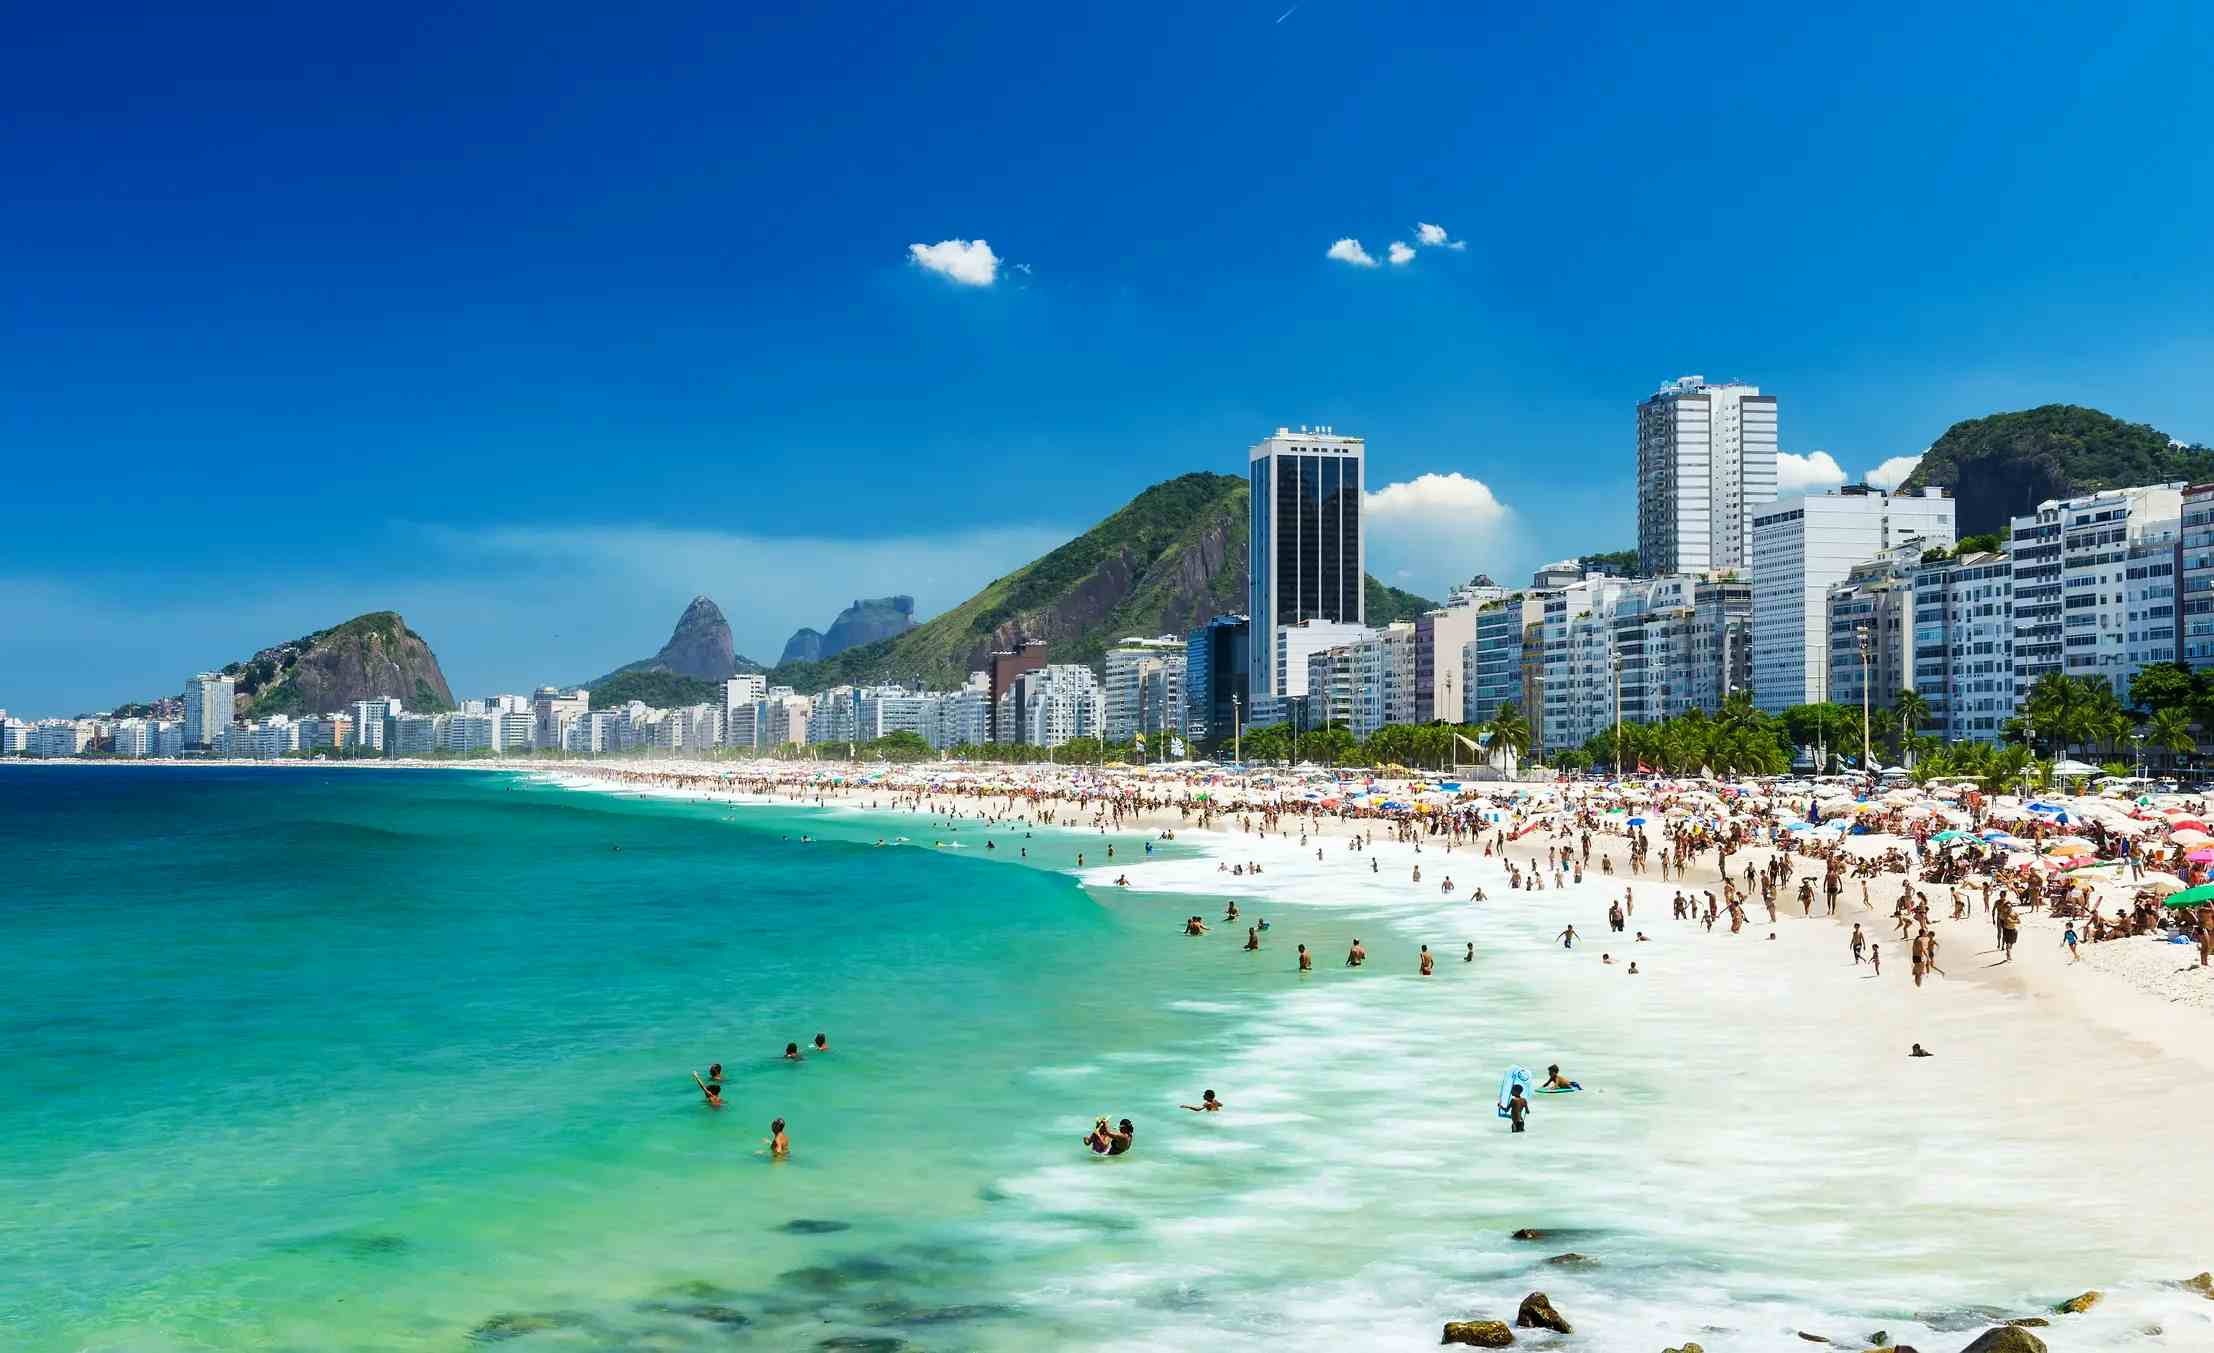 Praia de Copacabana image